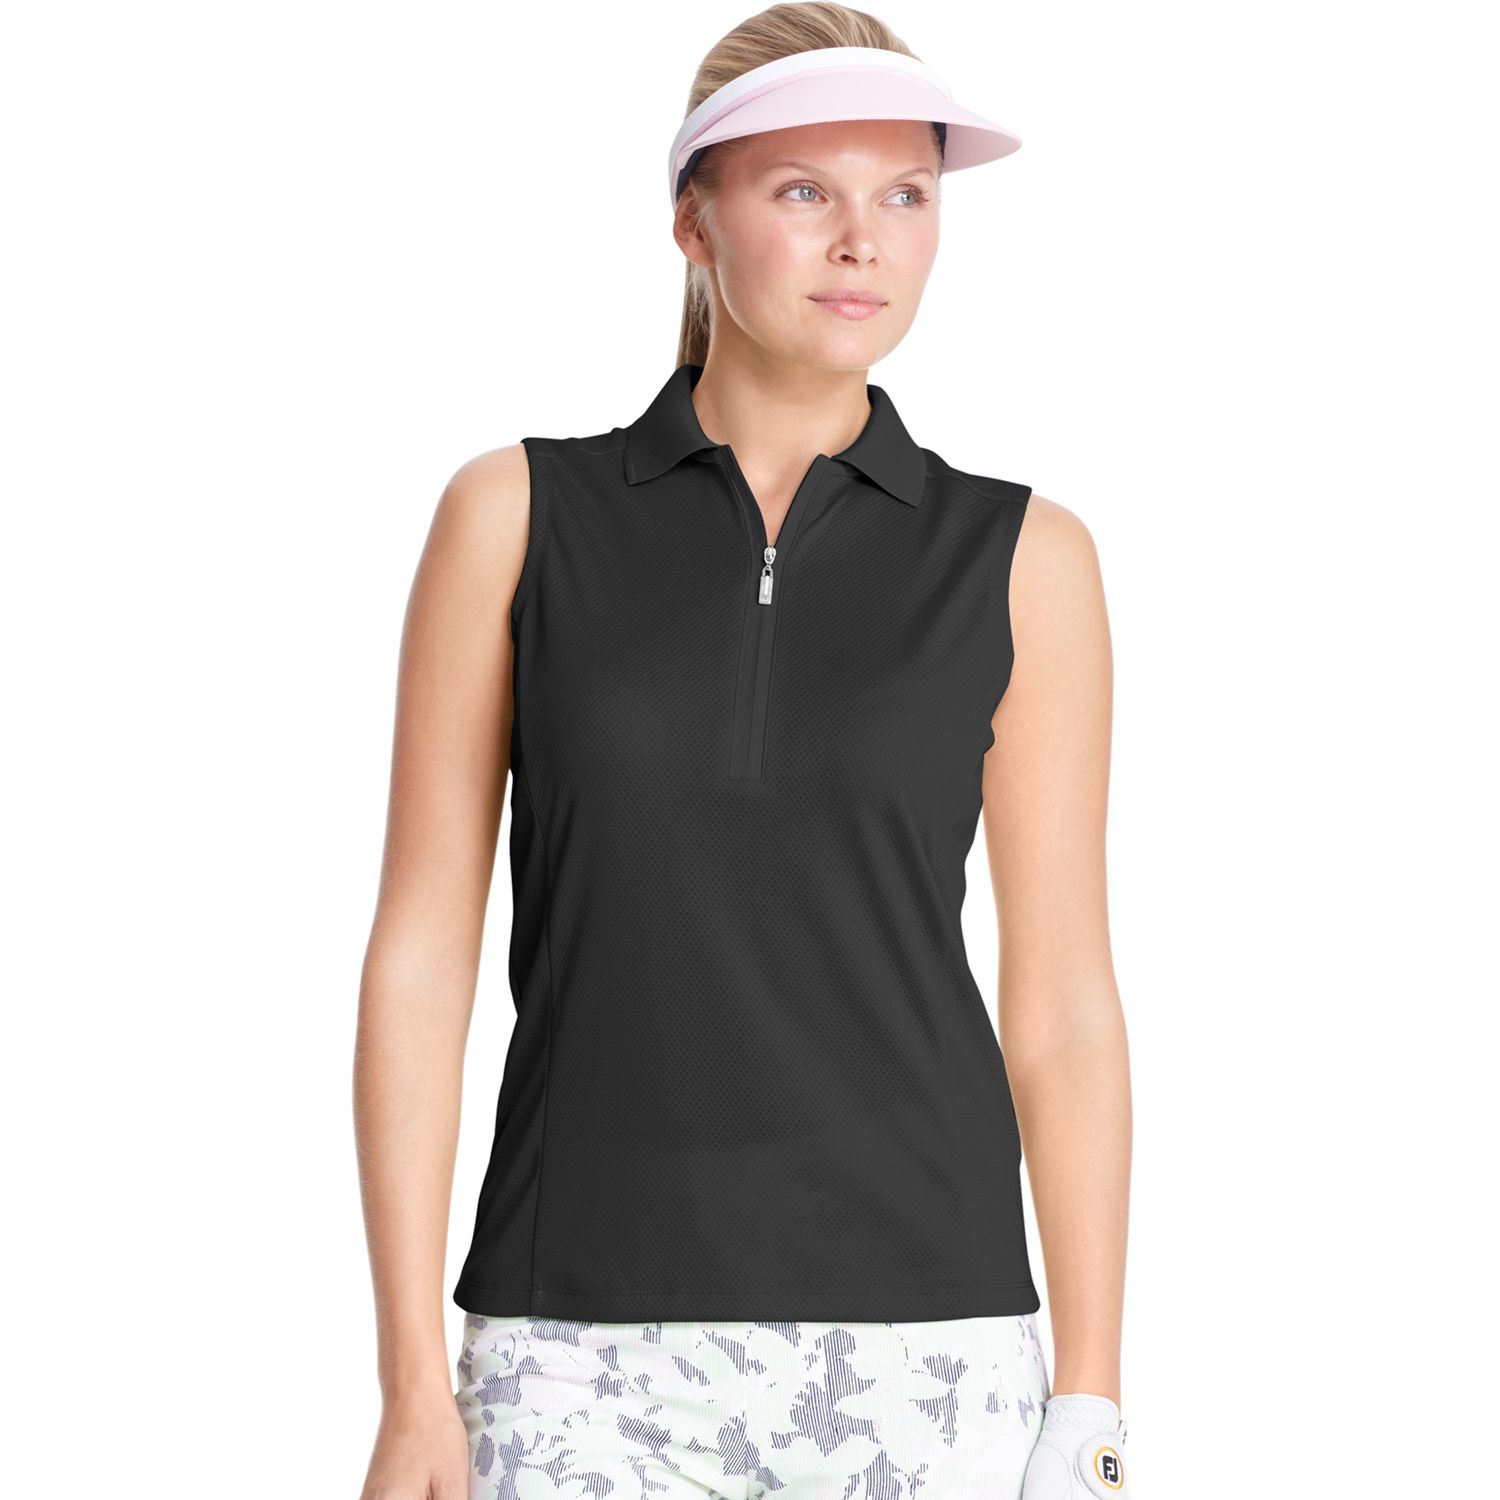 izod women's sleeveless golf shirts